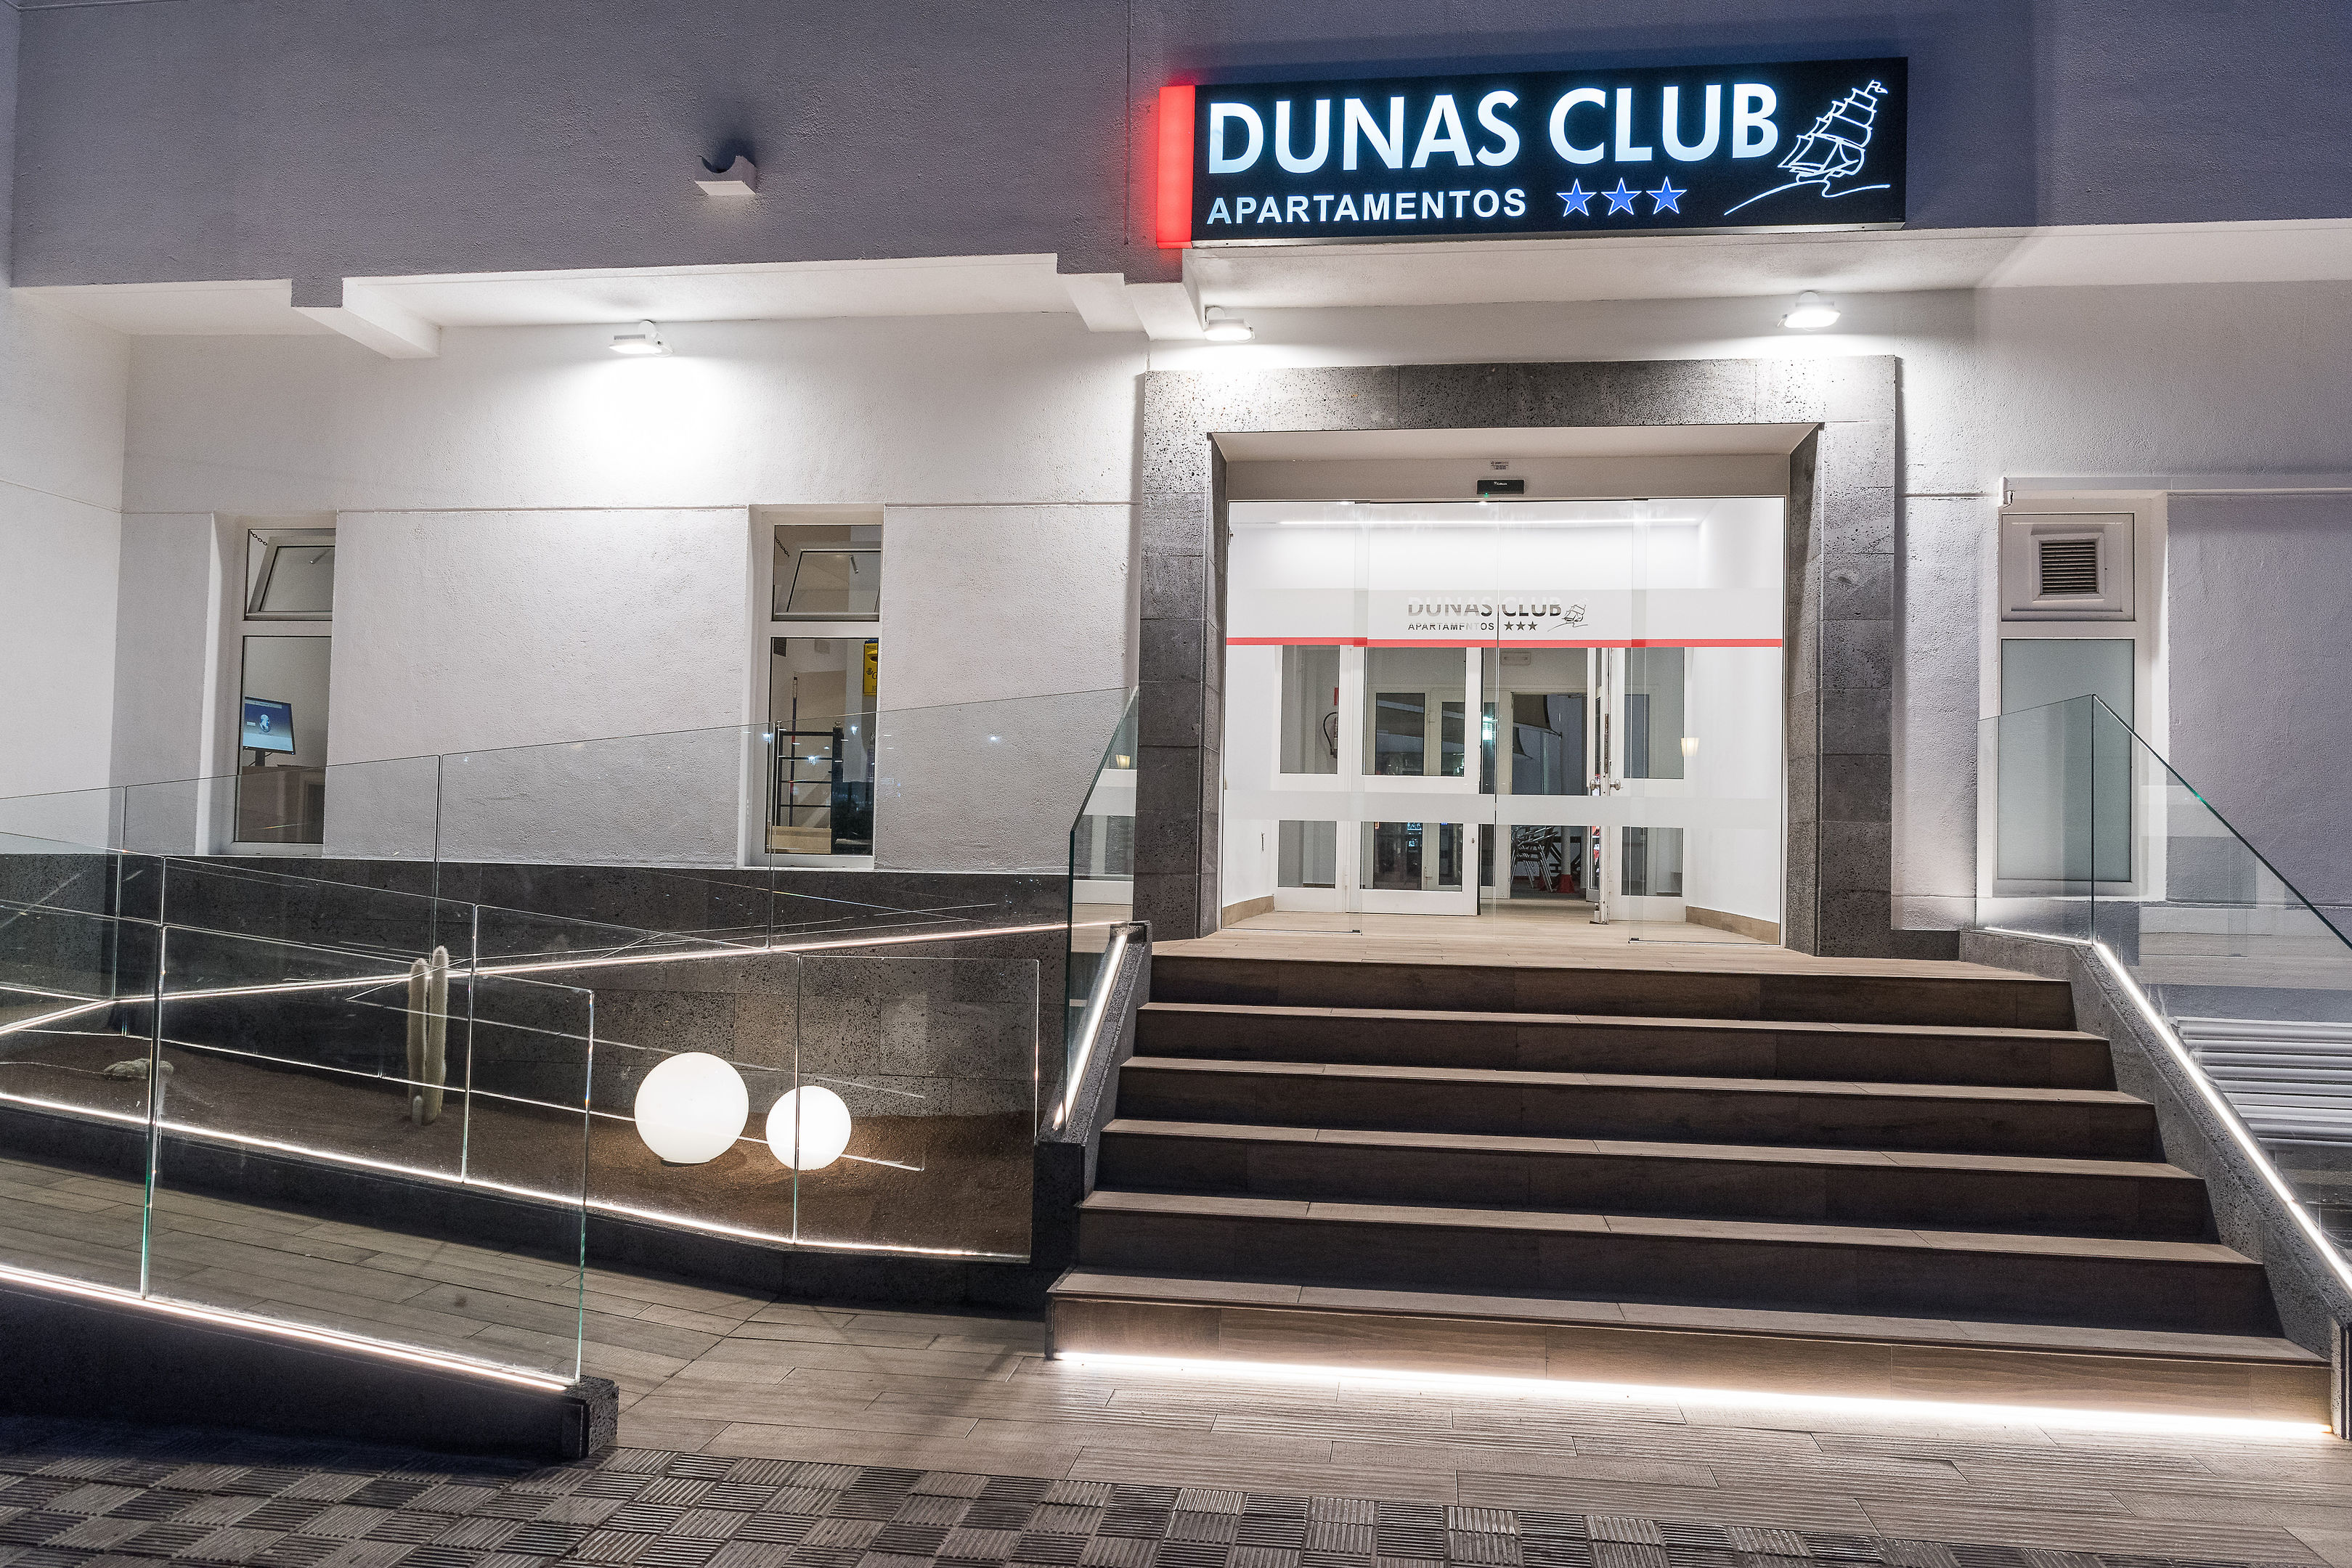 Dunas Club